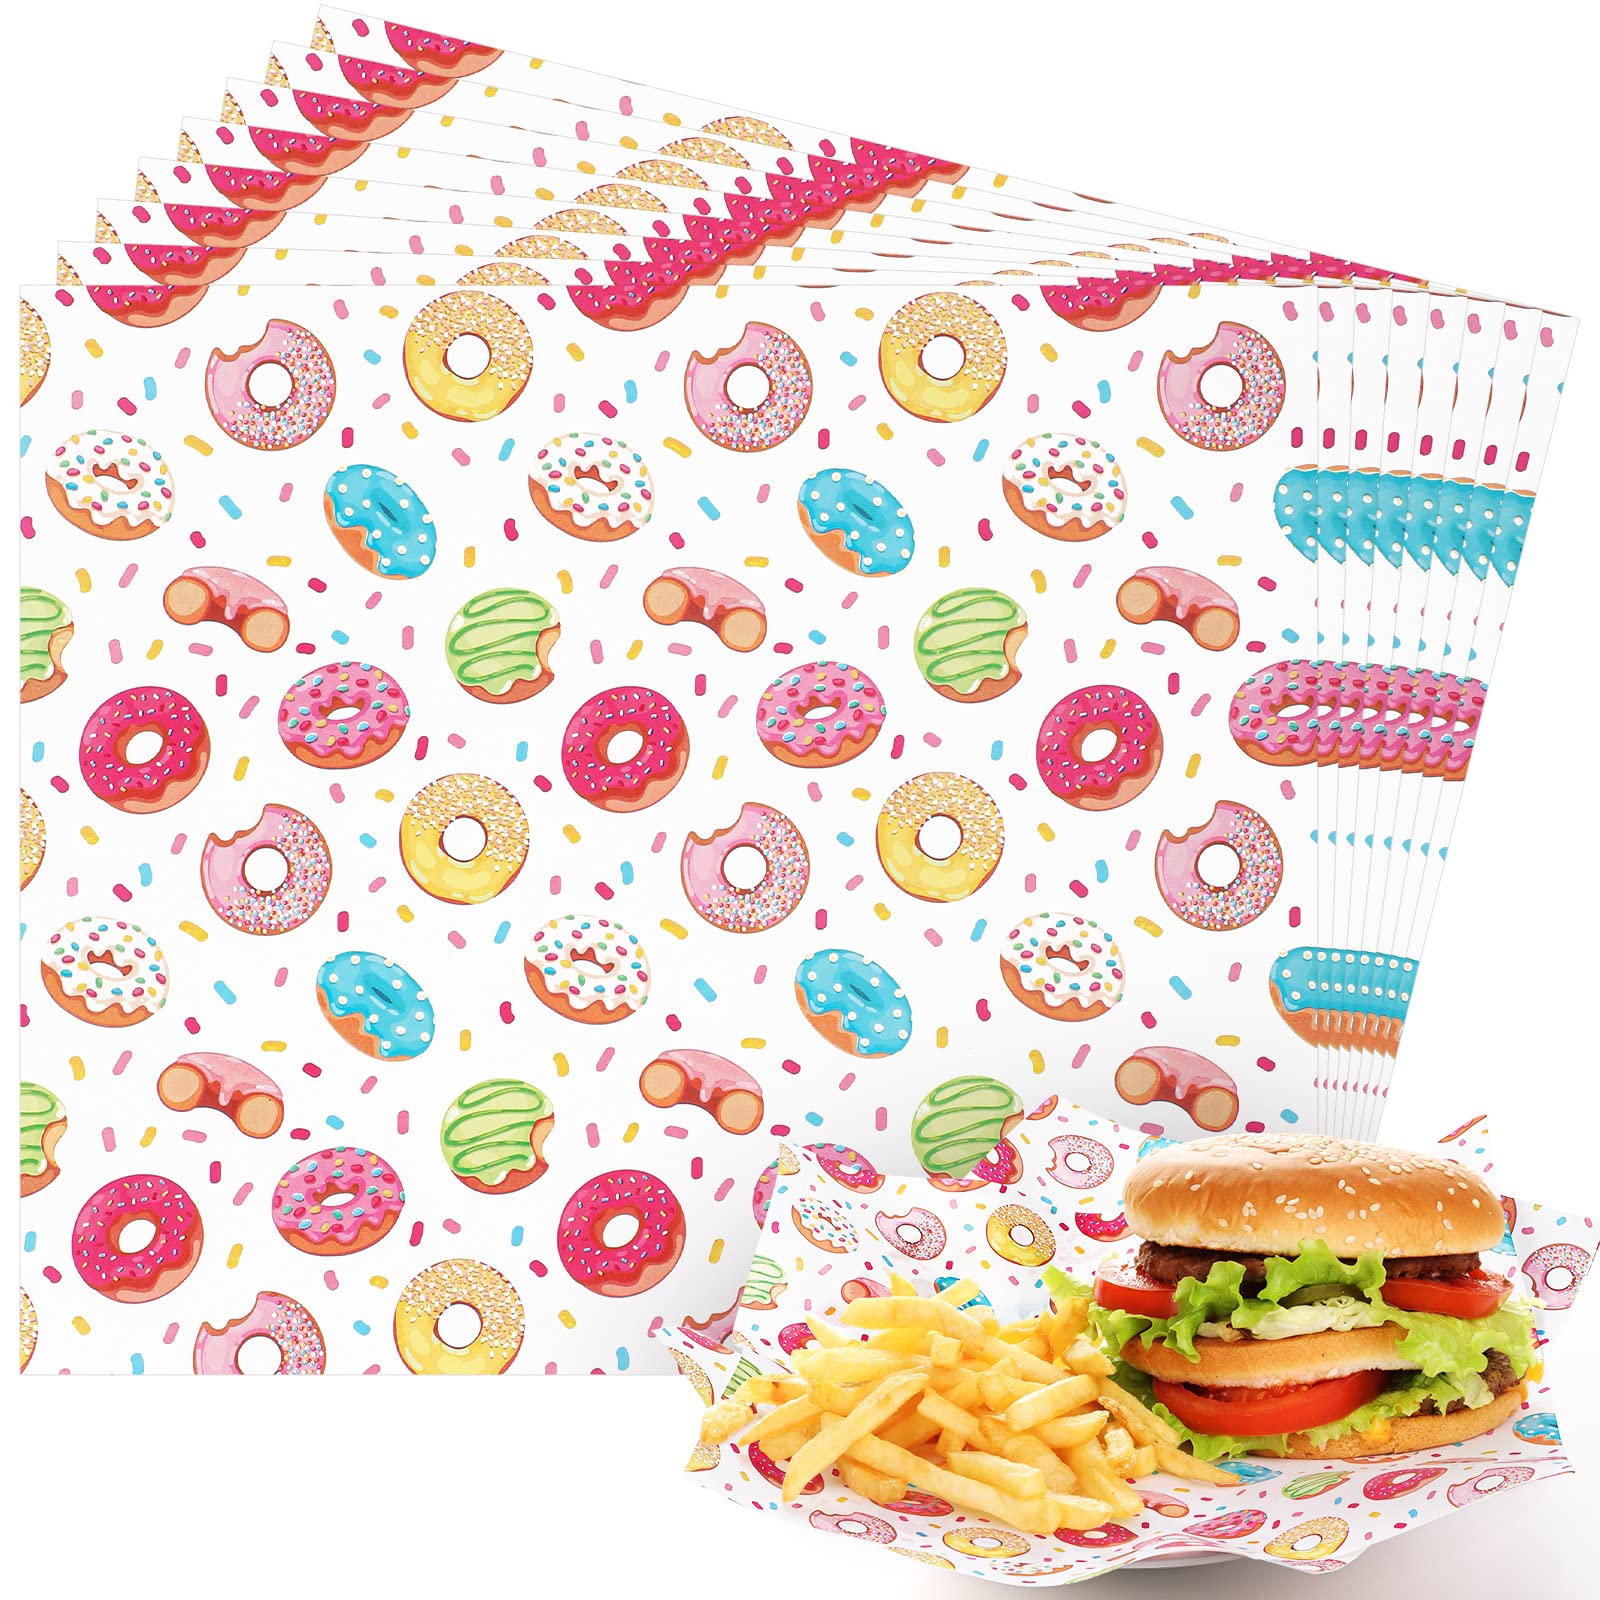 150 Pcs Donut Wax Paper Sheets, 10 x 8 Inch Hamburger Patty Paper, Sandwich Separators Wrap Paper for Home Restaurants Kitchen Baking Summer Party Supplies